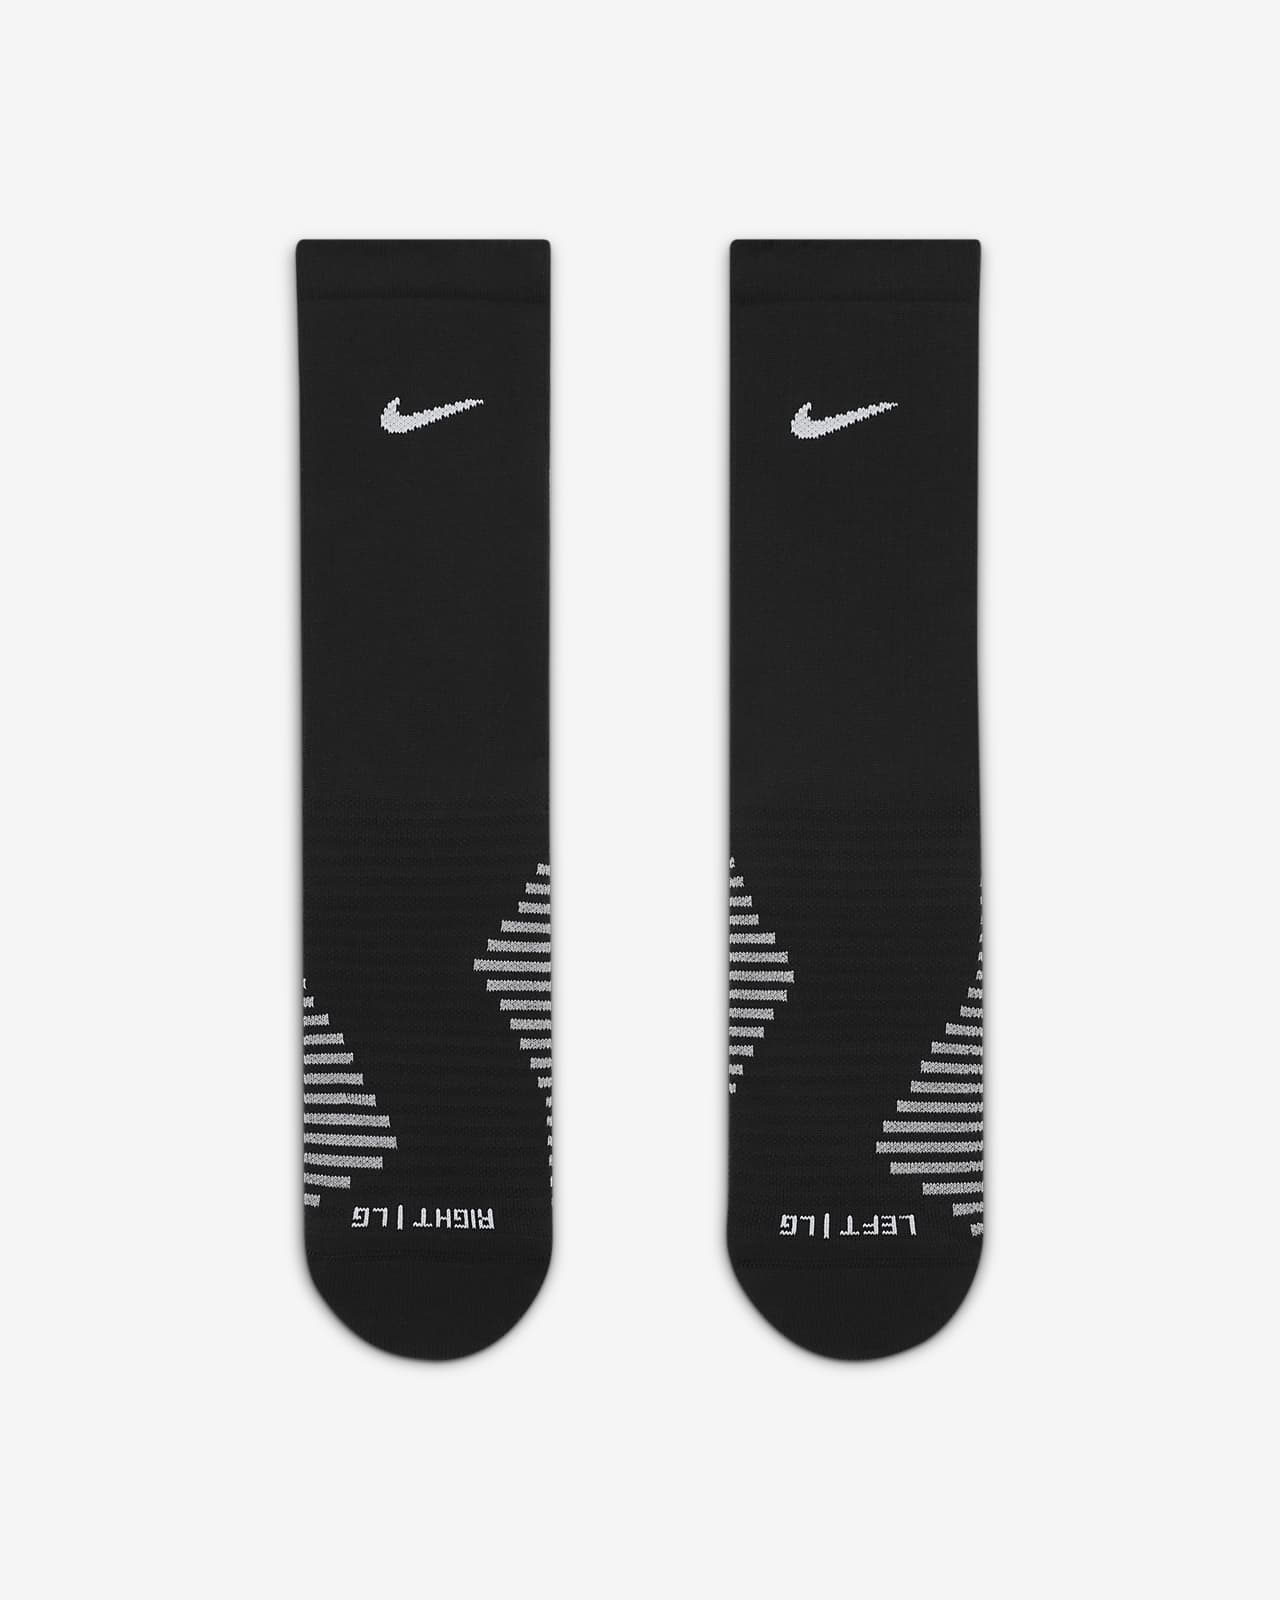 NikeGrip Strike– Premium Soccer